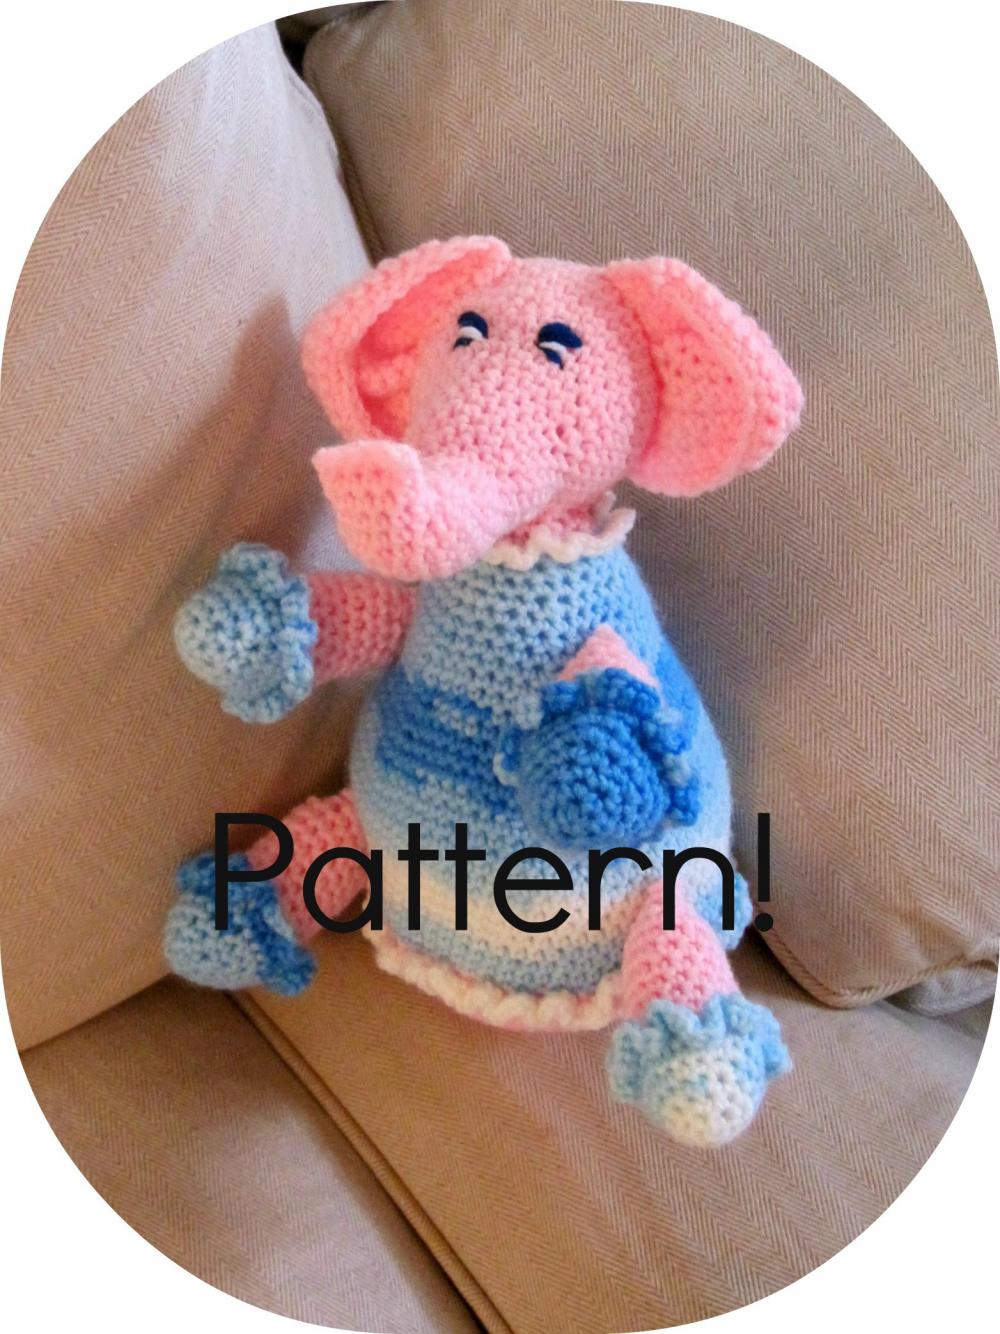 Crochet Pattern, Elephant Amigurumi Toy - Crochet Tutorial Pdf